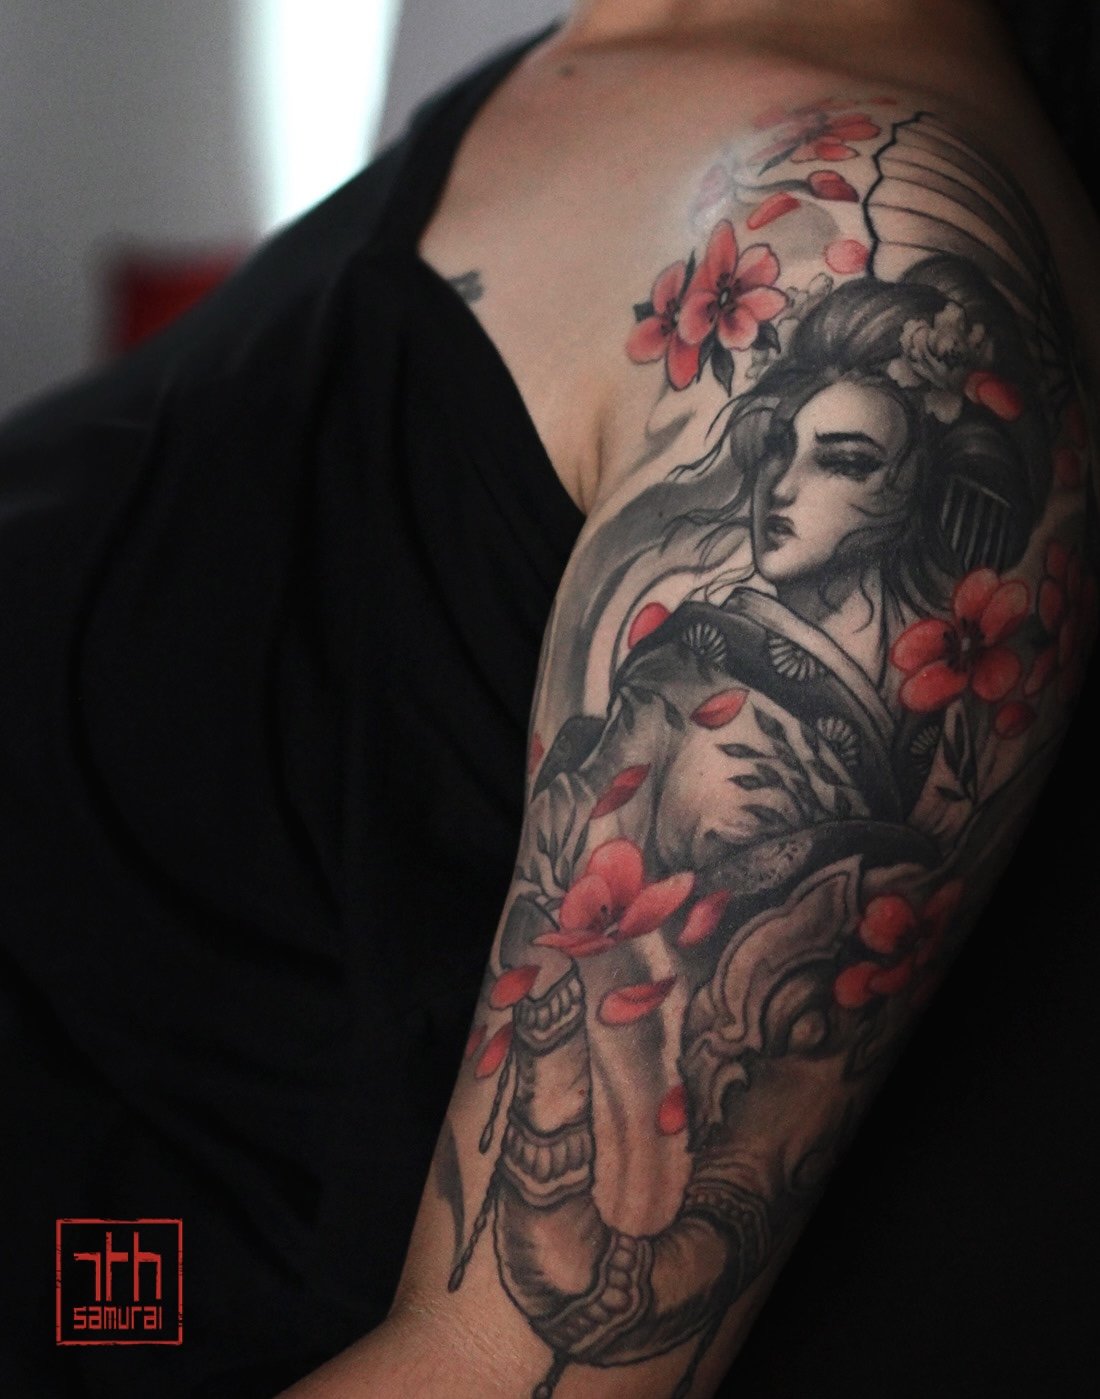 Geisha hannya mask elephant  Women's half sleeve neo japanese asian sleeve tattoo with red highlights cherry blossoms  asian artist: Kai 7th Samurai. YEG Edmonton, Alberta, Canada 2023 best 2024 